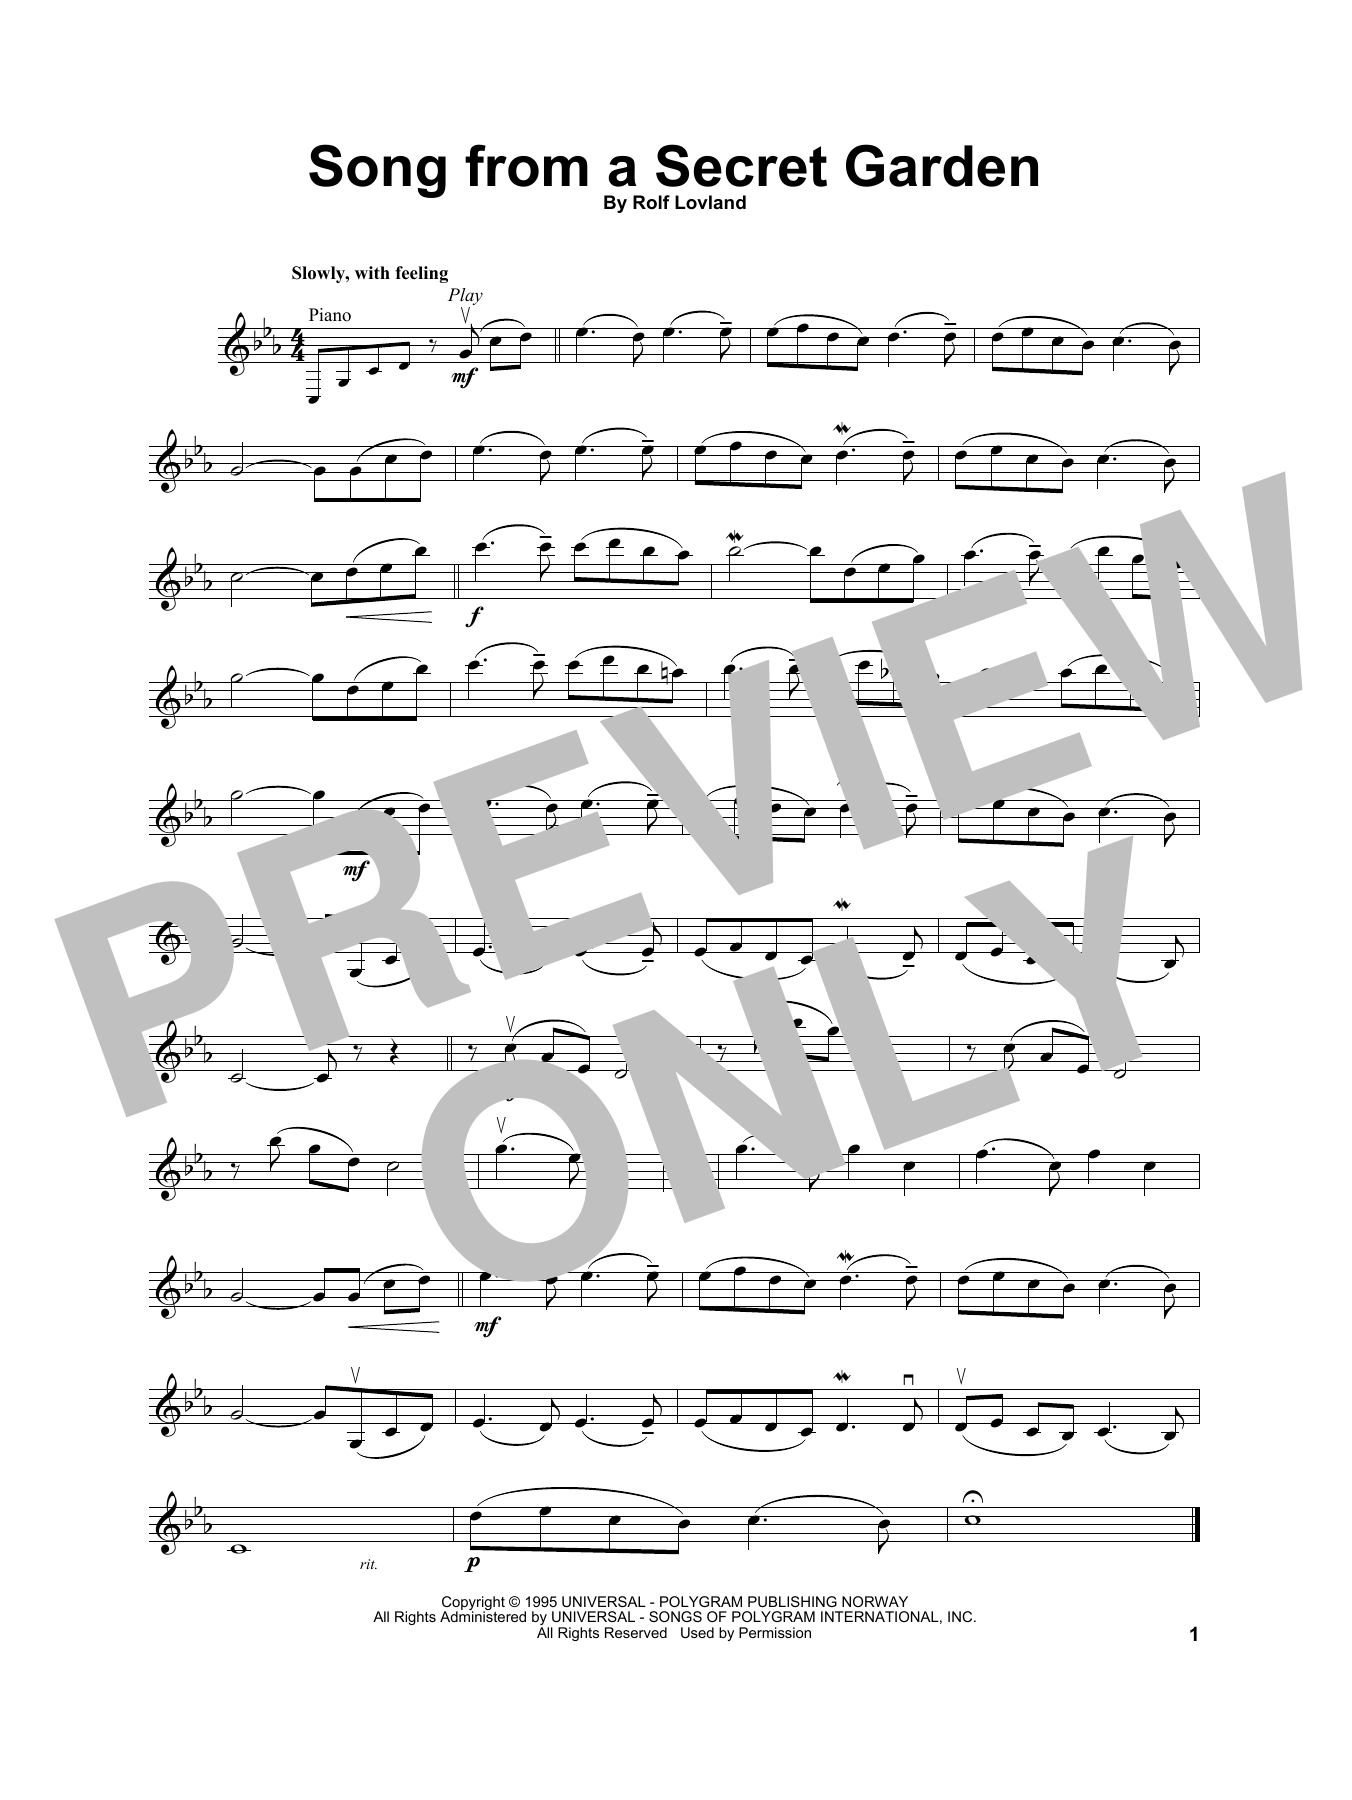 Secret Garden Song From A Secret Garden Sheet Music Notes & Chords for Violin Duet - Download or Print PDF